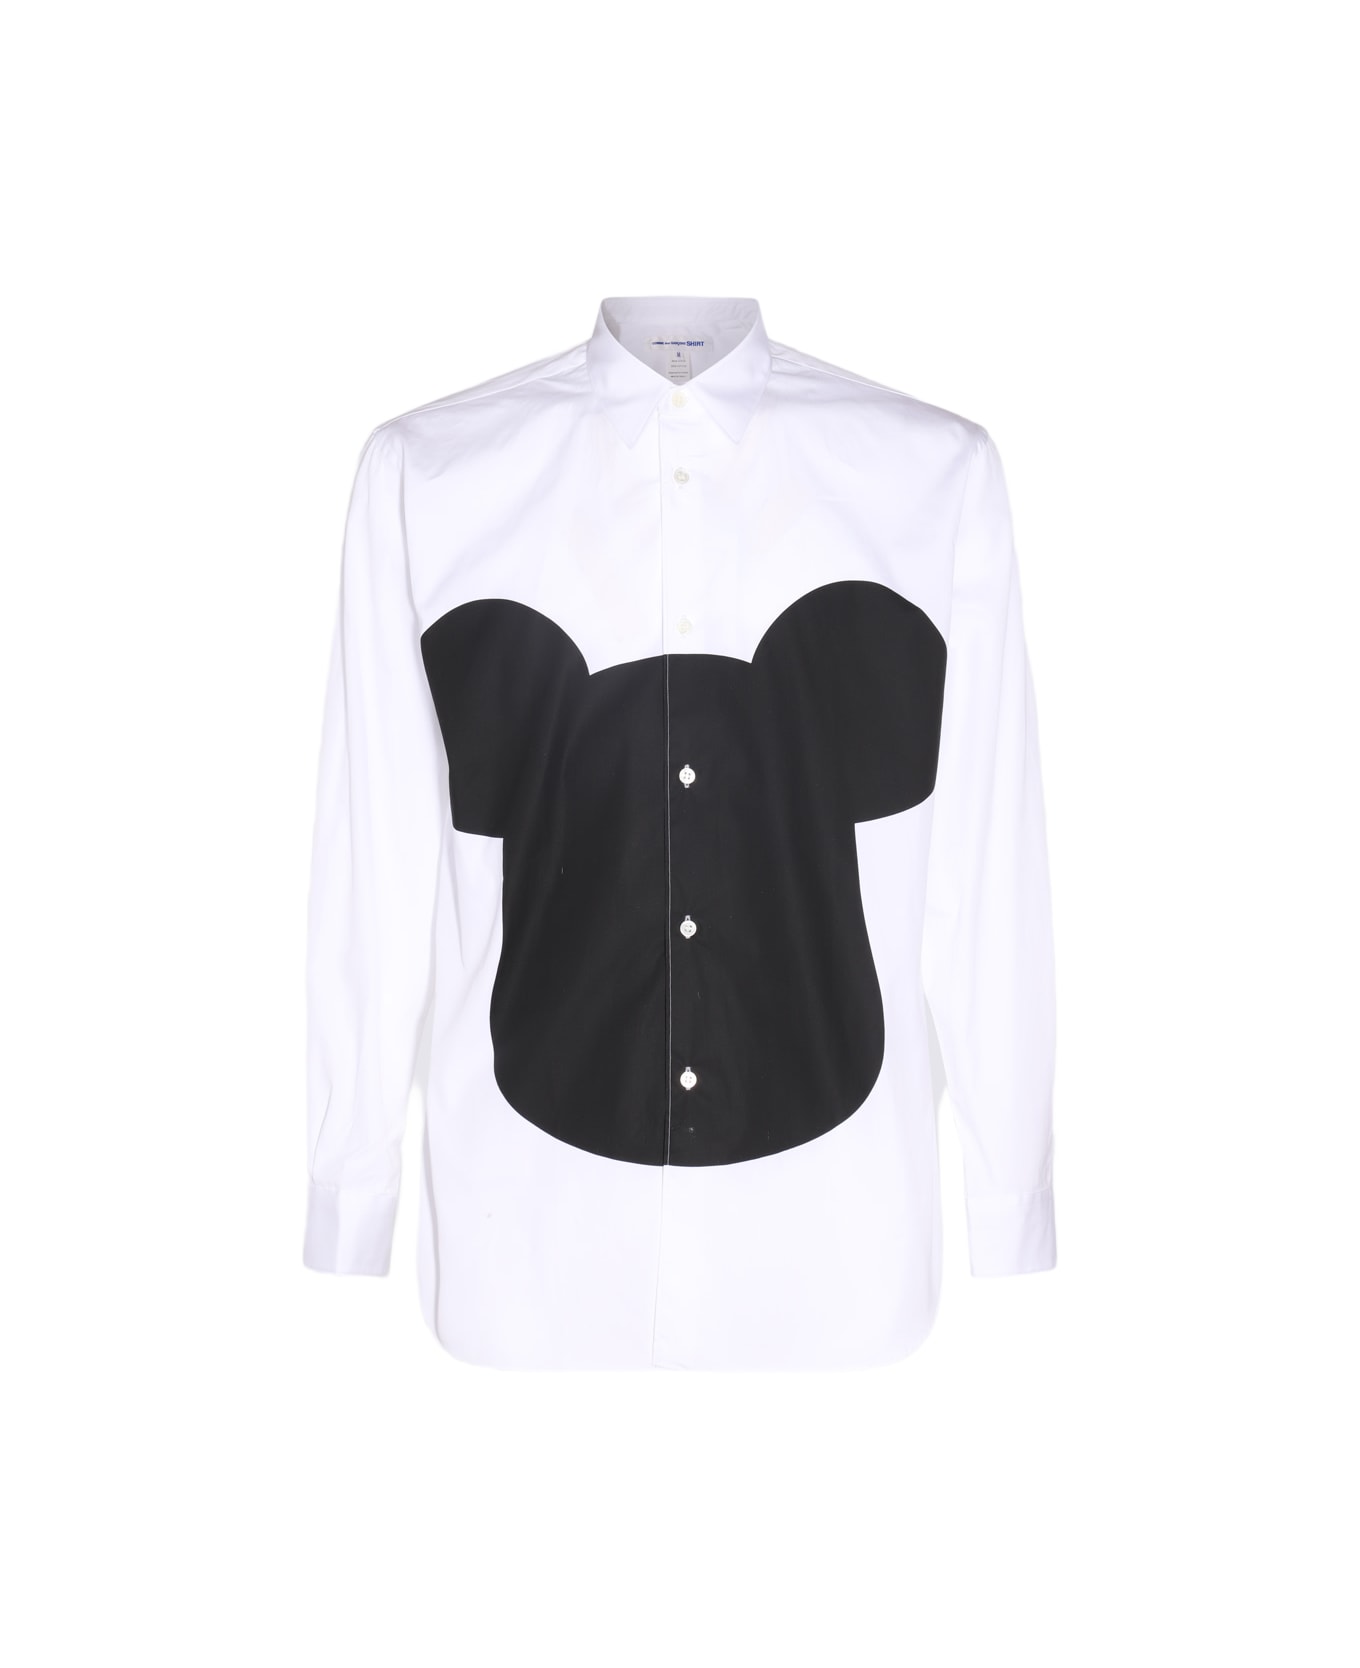 Comme des Garçons White Cotton Mickey Mouse Shirt - White